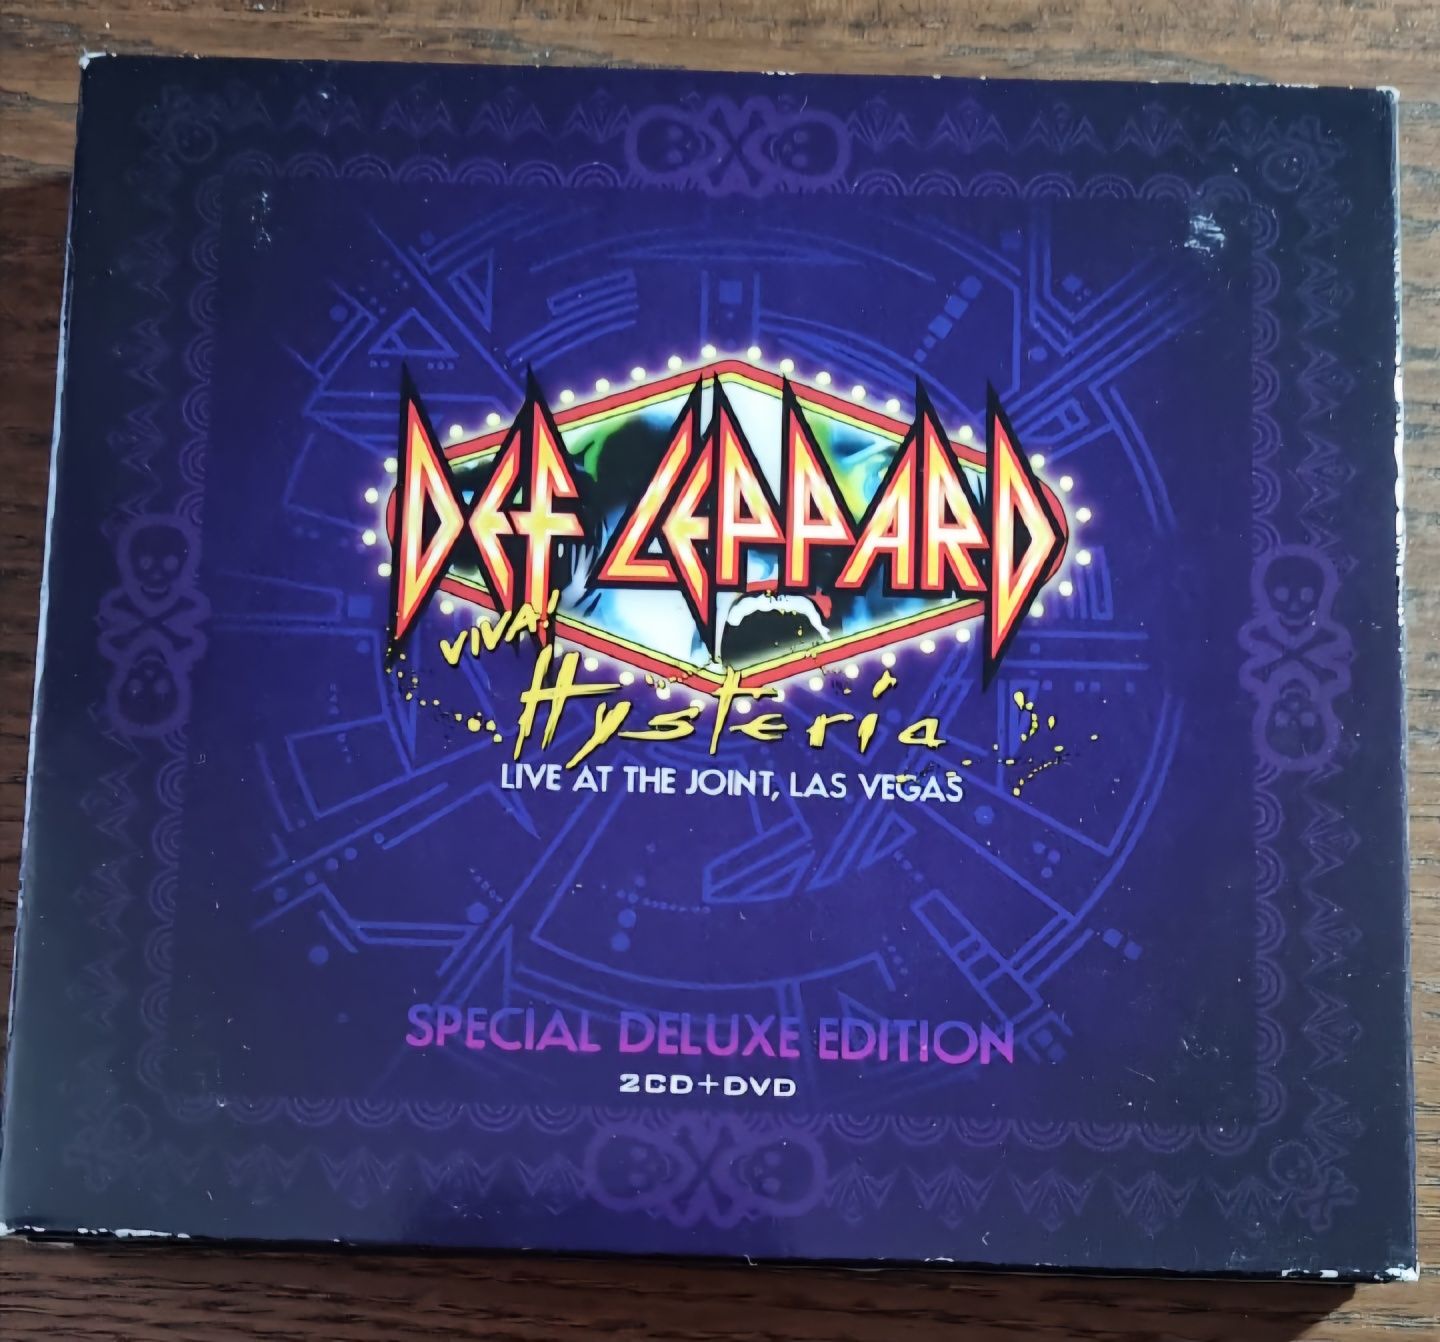 Def Leppard - Viva! Hysteria - Deluxe Edition